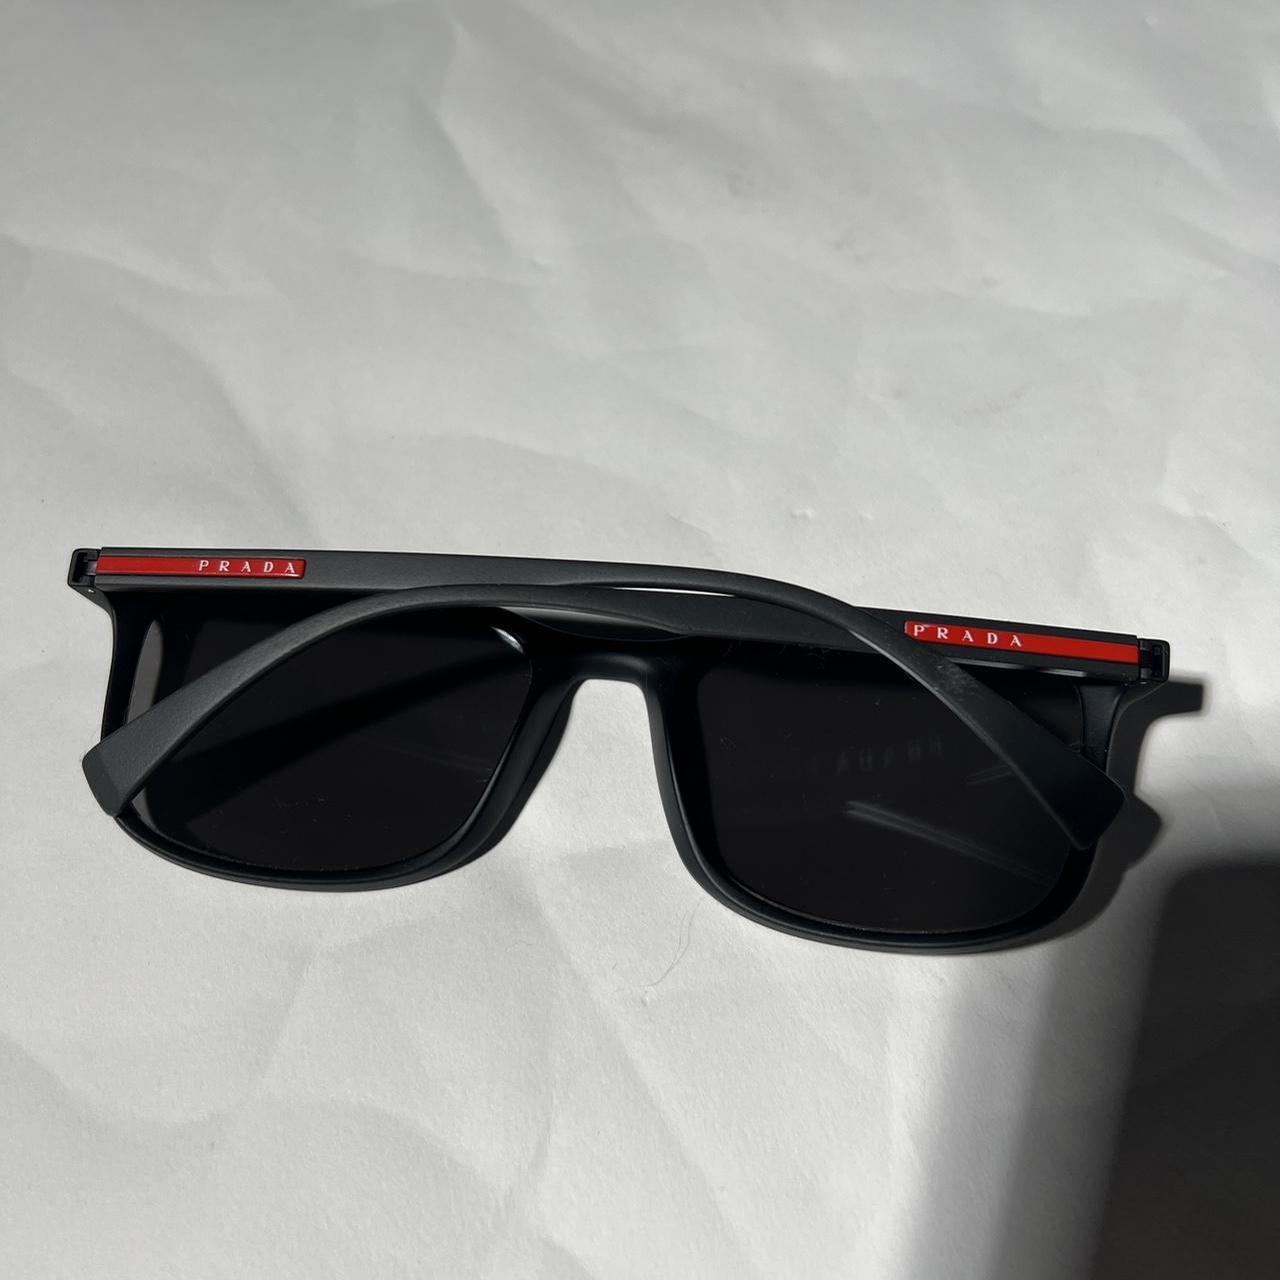 Prada Men's Black and Red Sunglasses - 1